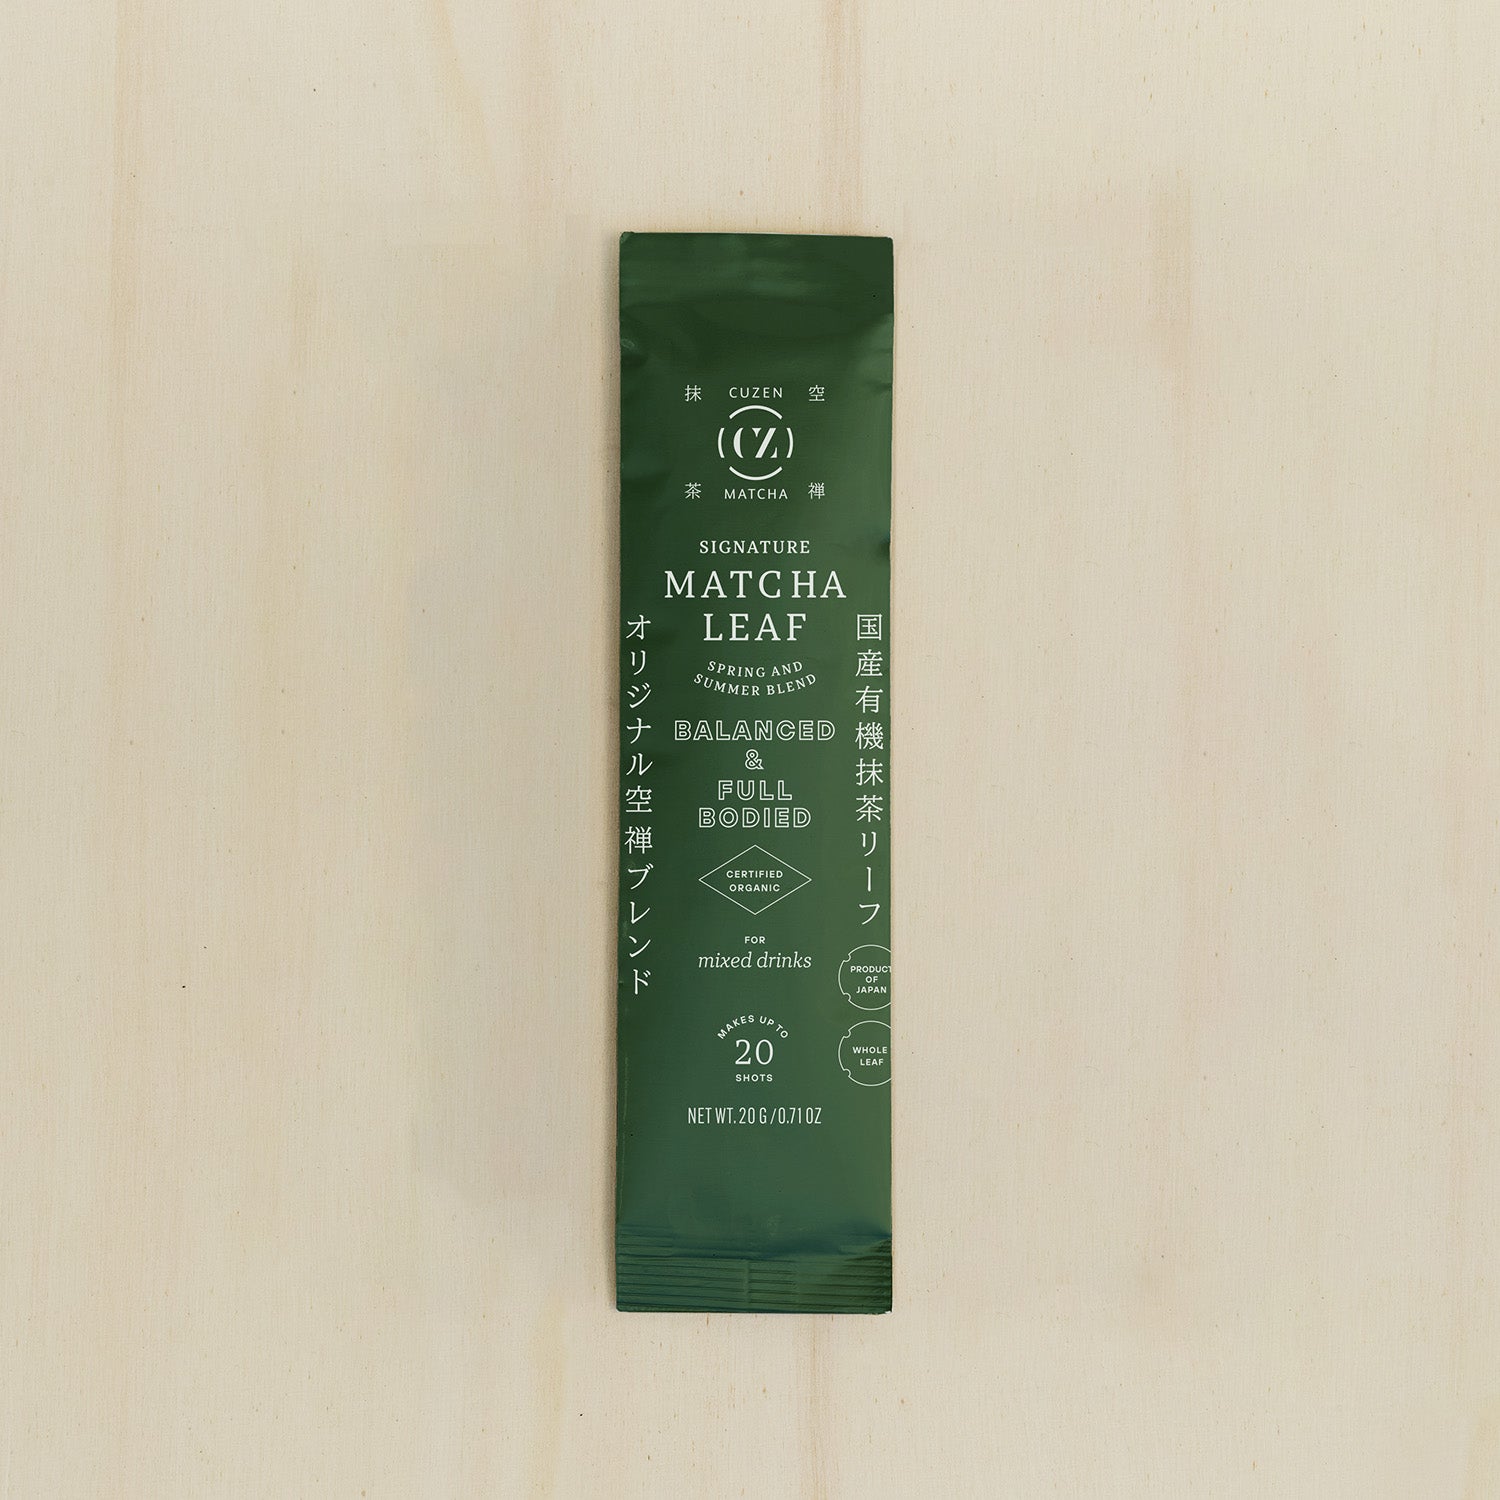 Cuzen Matcha I Matcha Maker Gift Starter Kit w/ Matcha Leaf and